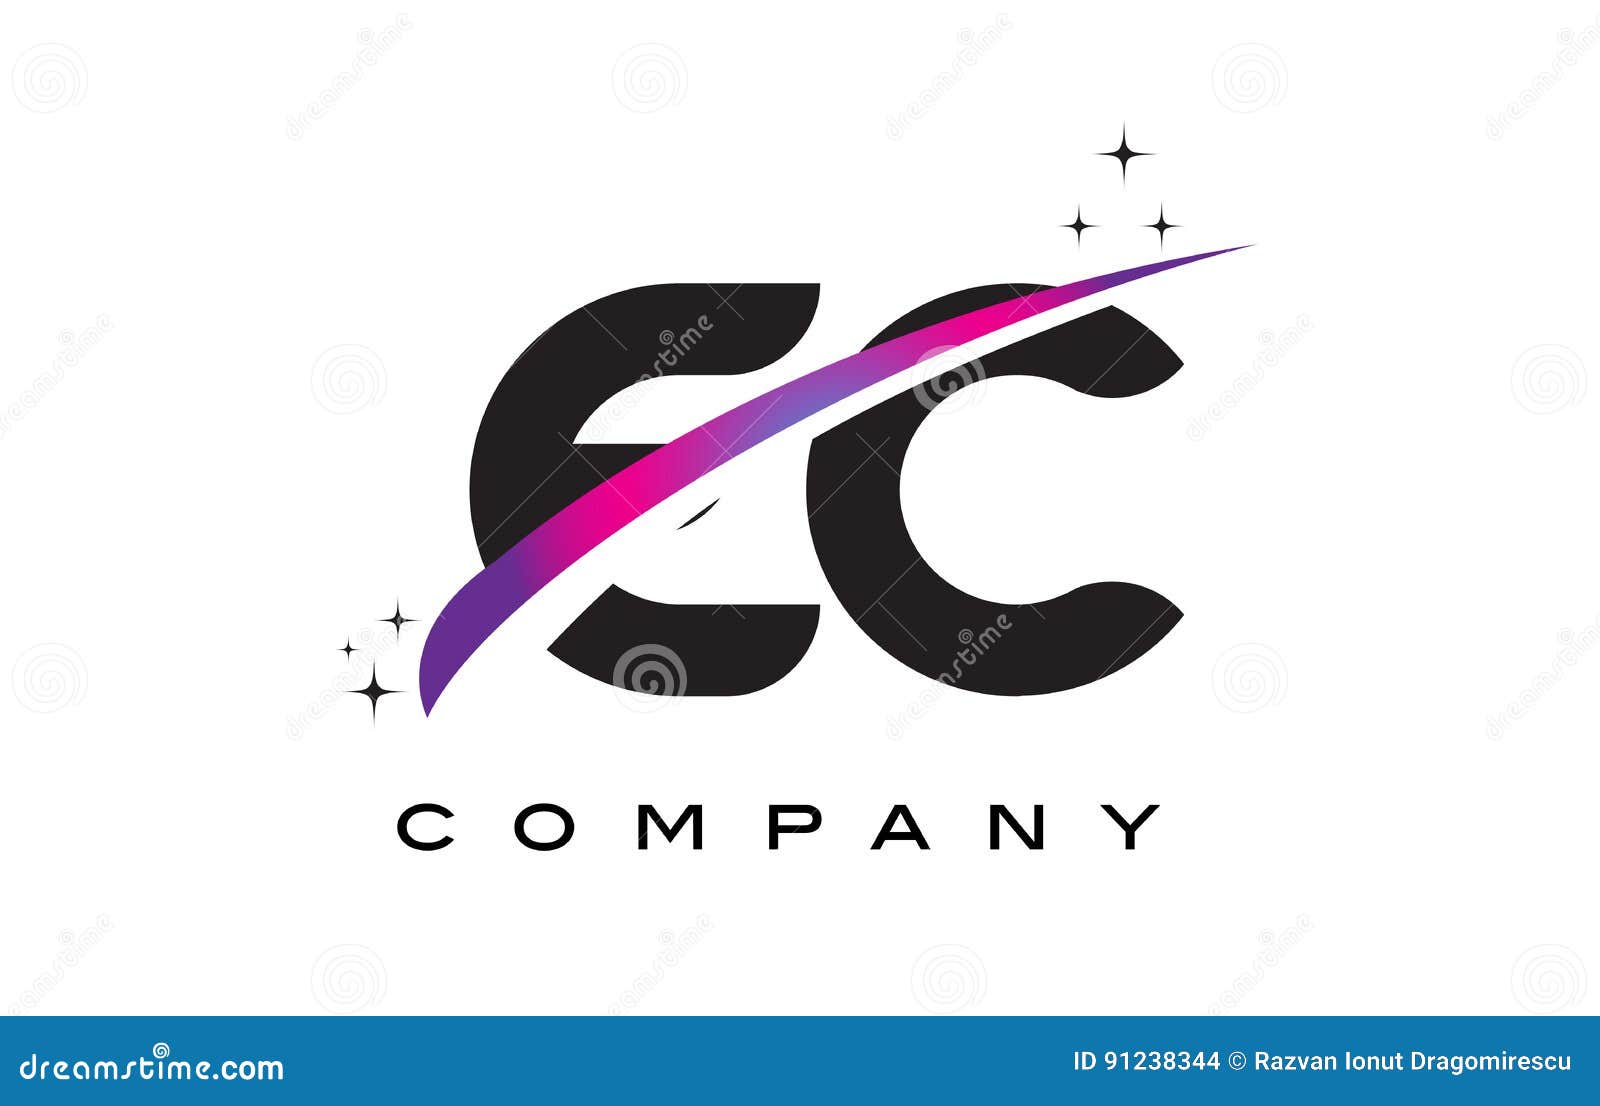 ec e c black letter logo  with purple magenta swoosh